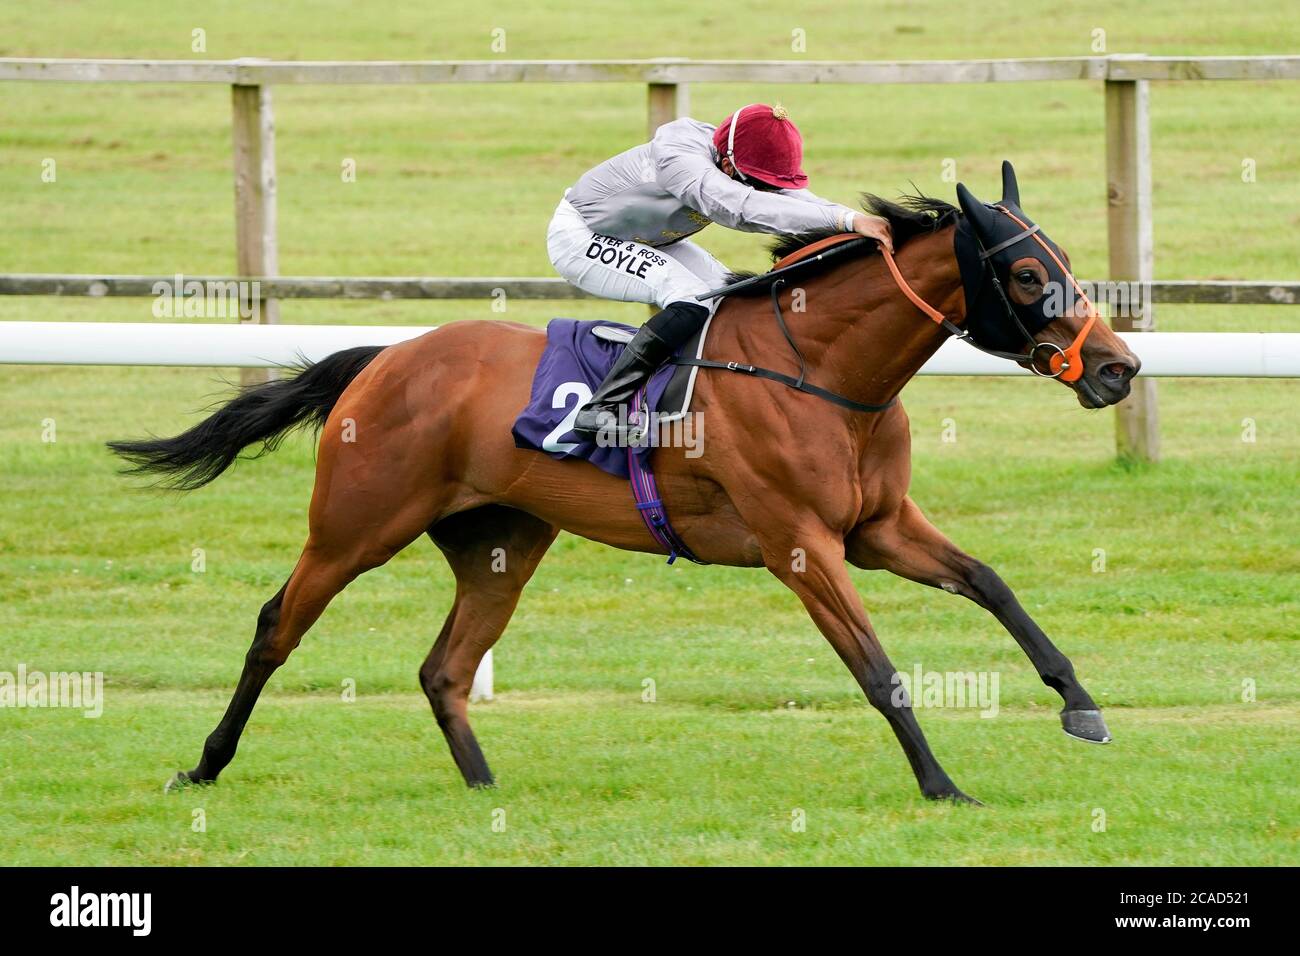 Sean Levey riding Al Dawodiya win The visitbath.co.uk Maiden Fillies' Stakes at Bath Racecourse. Stock Photo